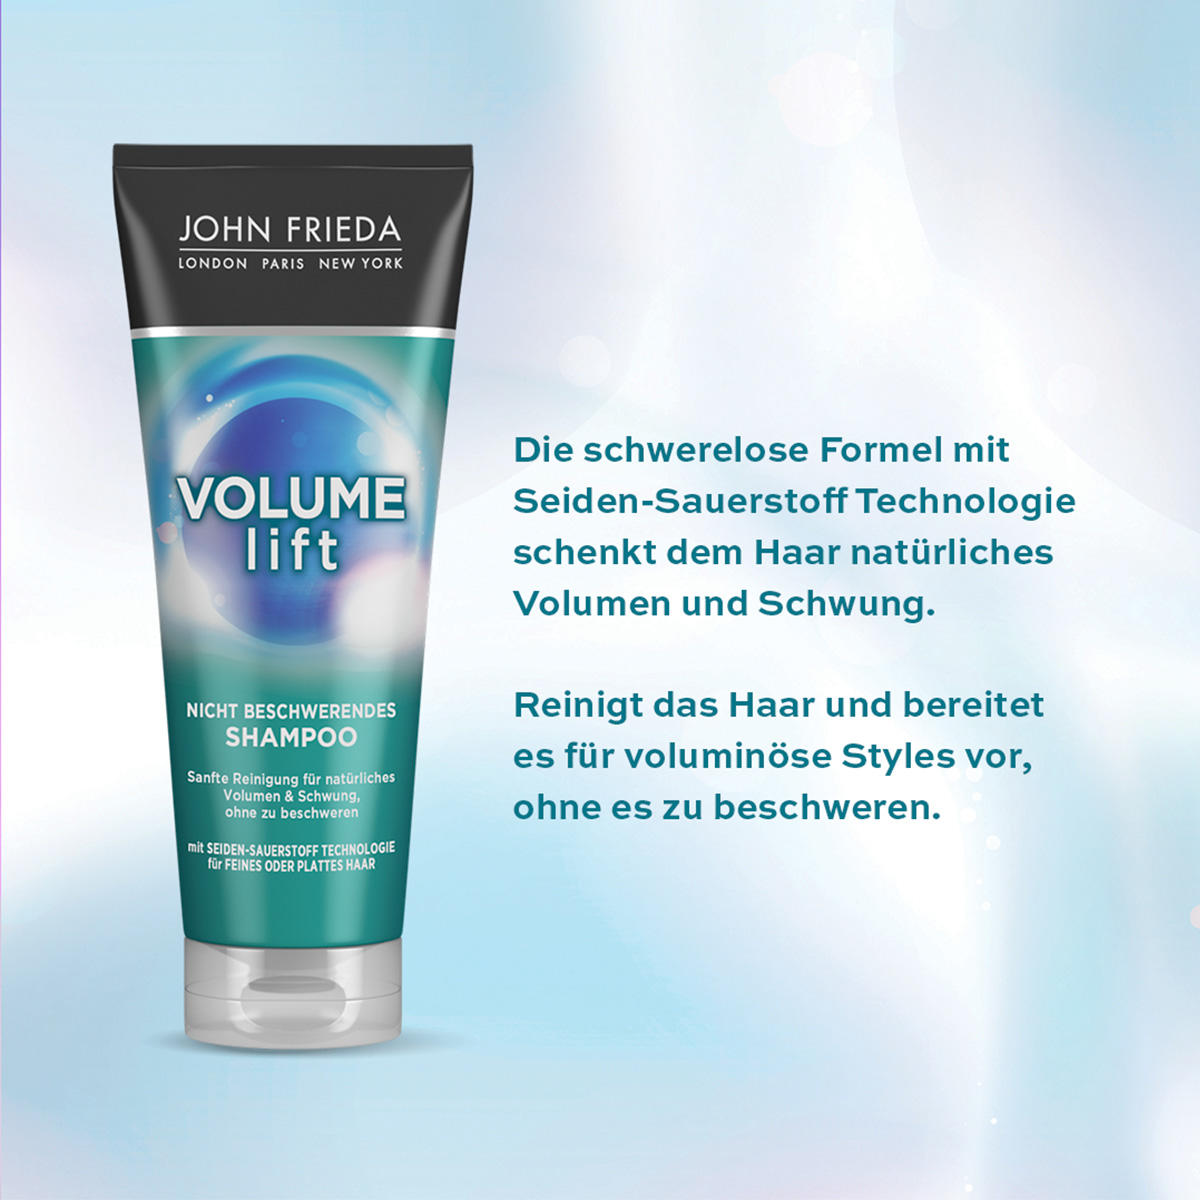 JOHN FRIEDA Volume Lift Non weighing shampoo 250 ml - 3